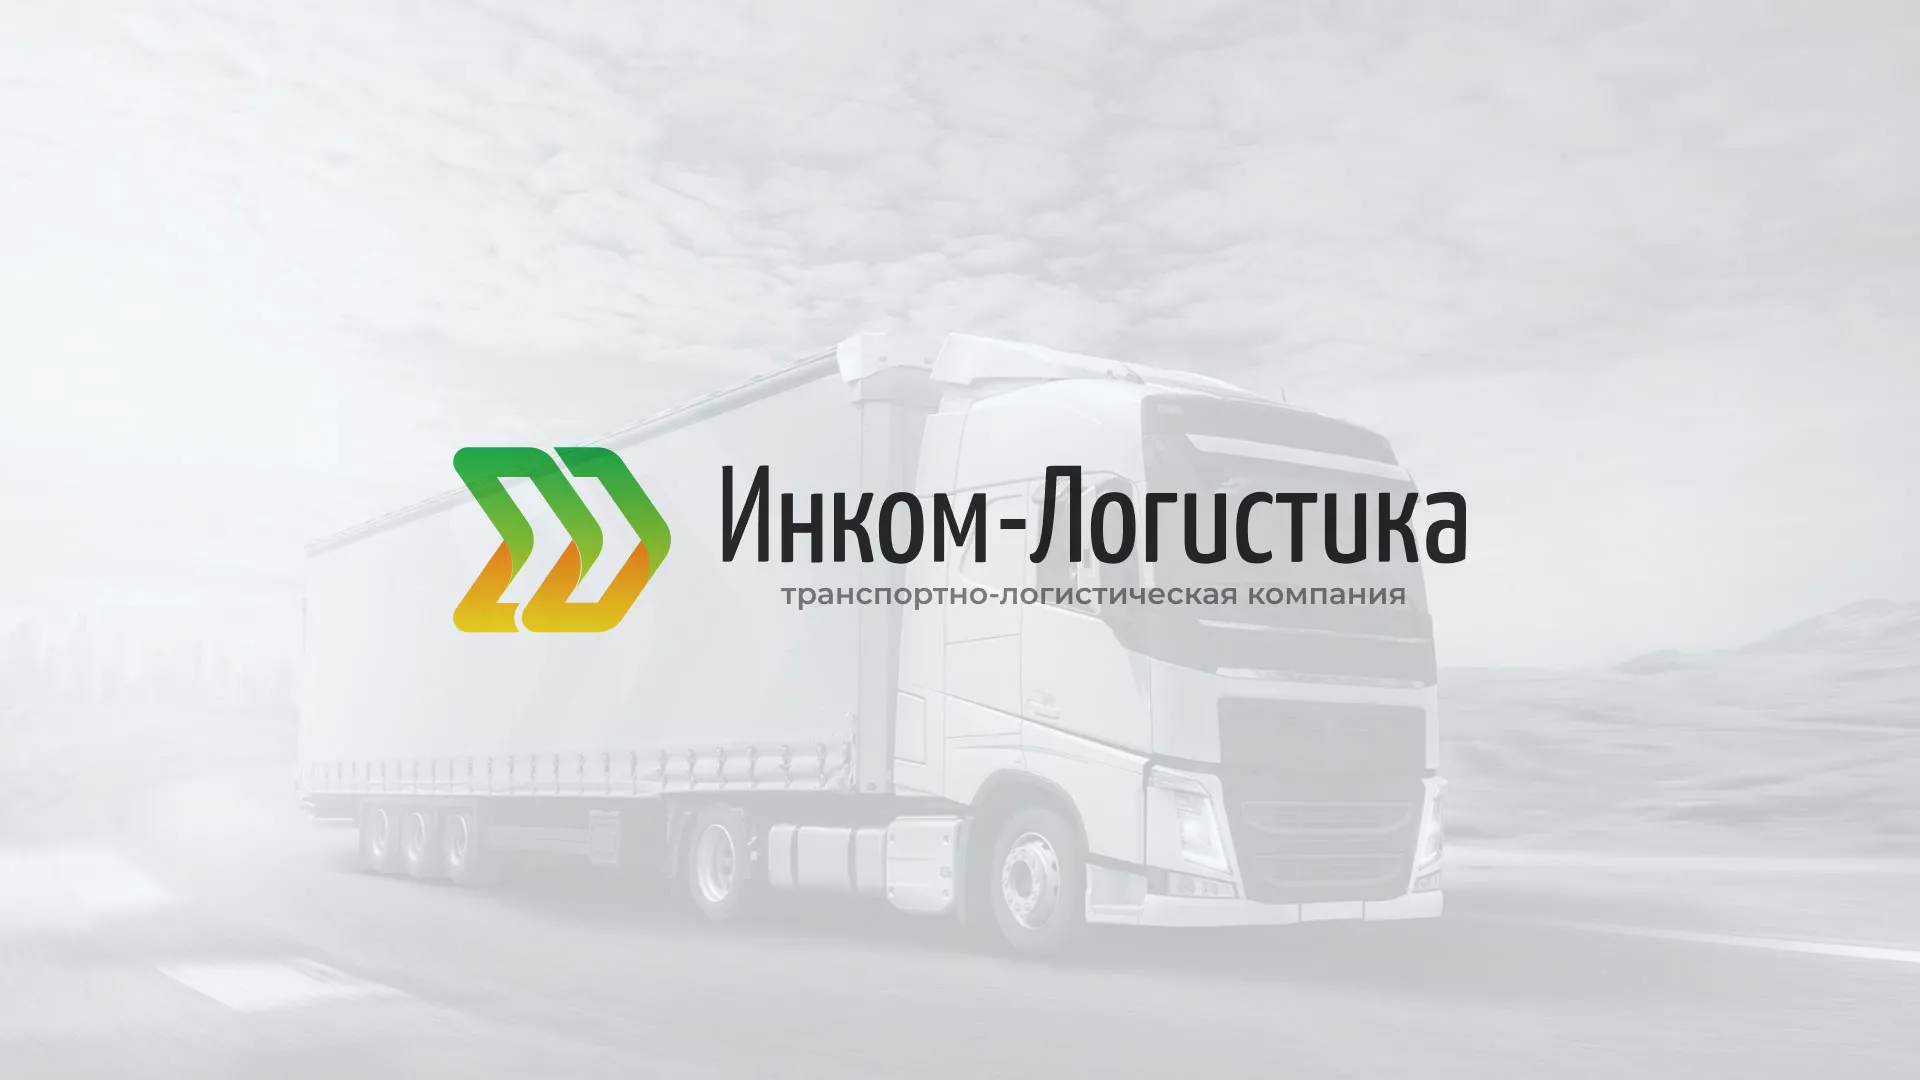 Разработка логотипа и сайта компании «Инком-Логистика» в Кемерово